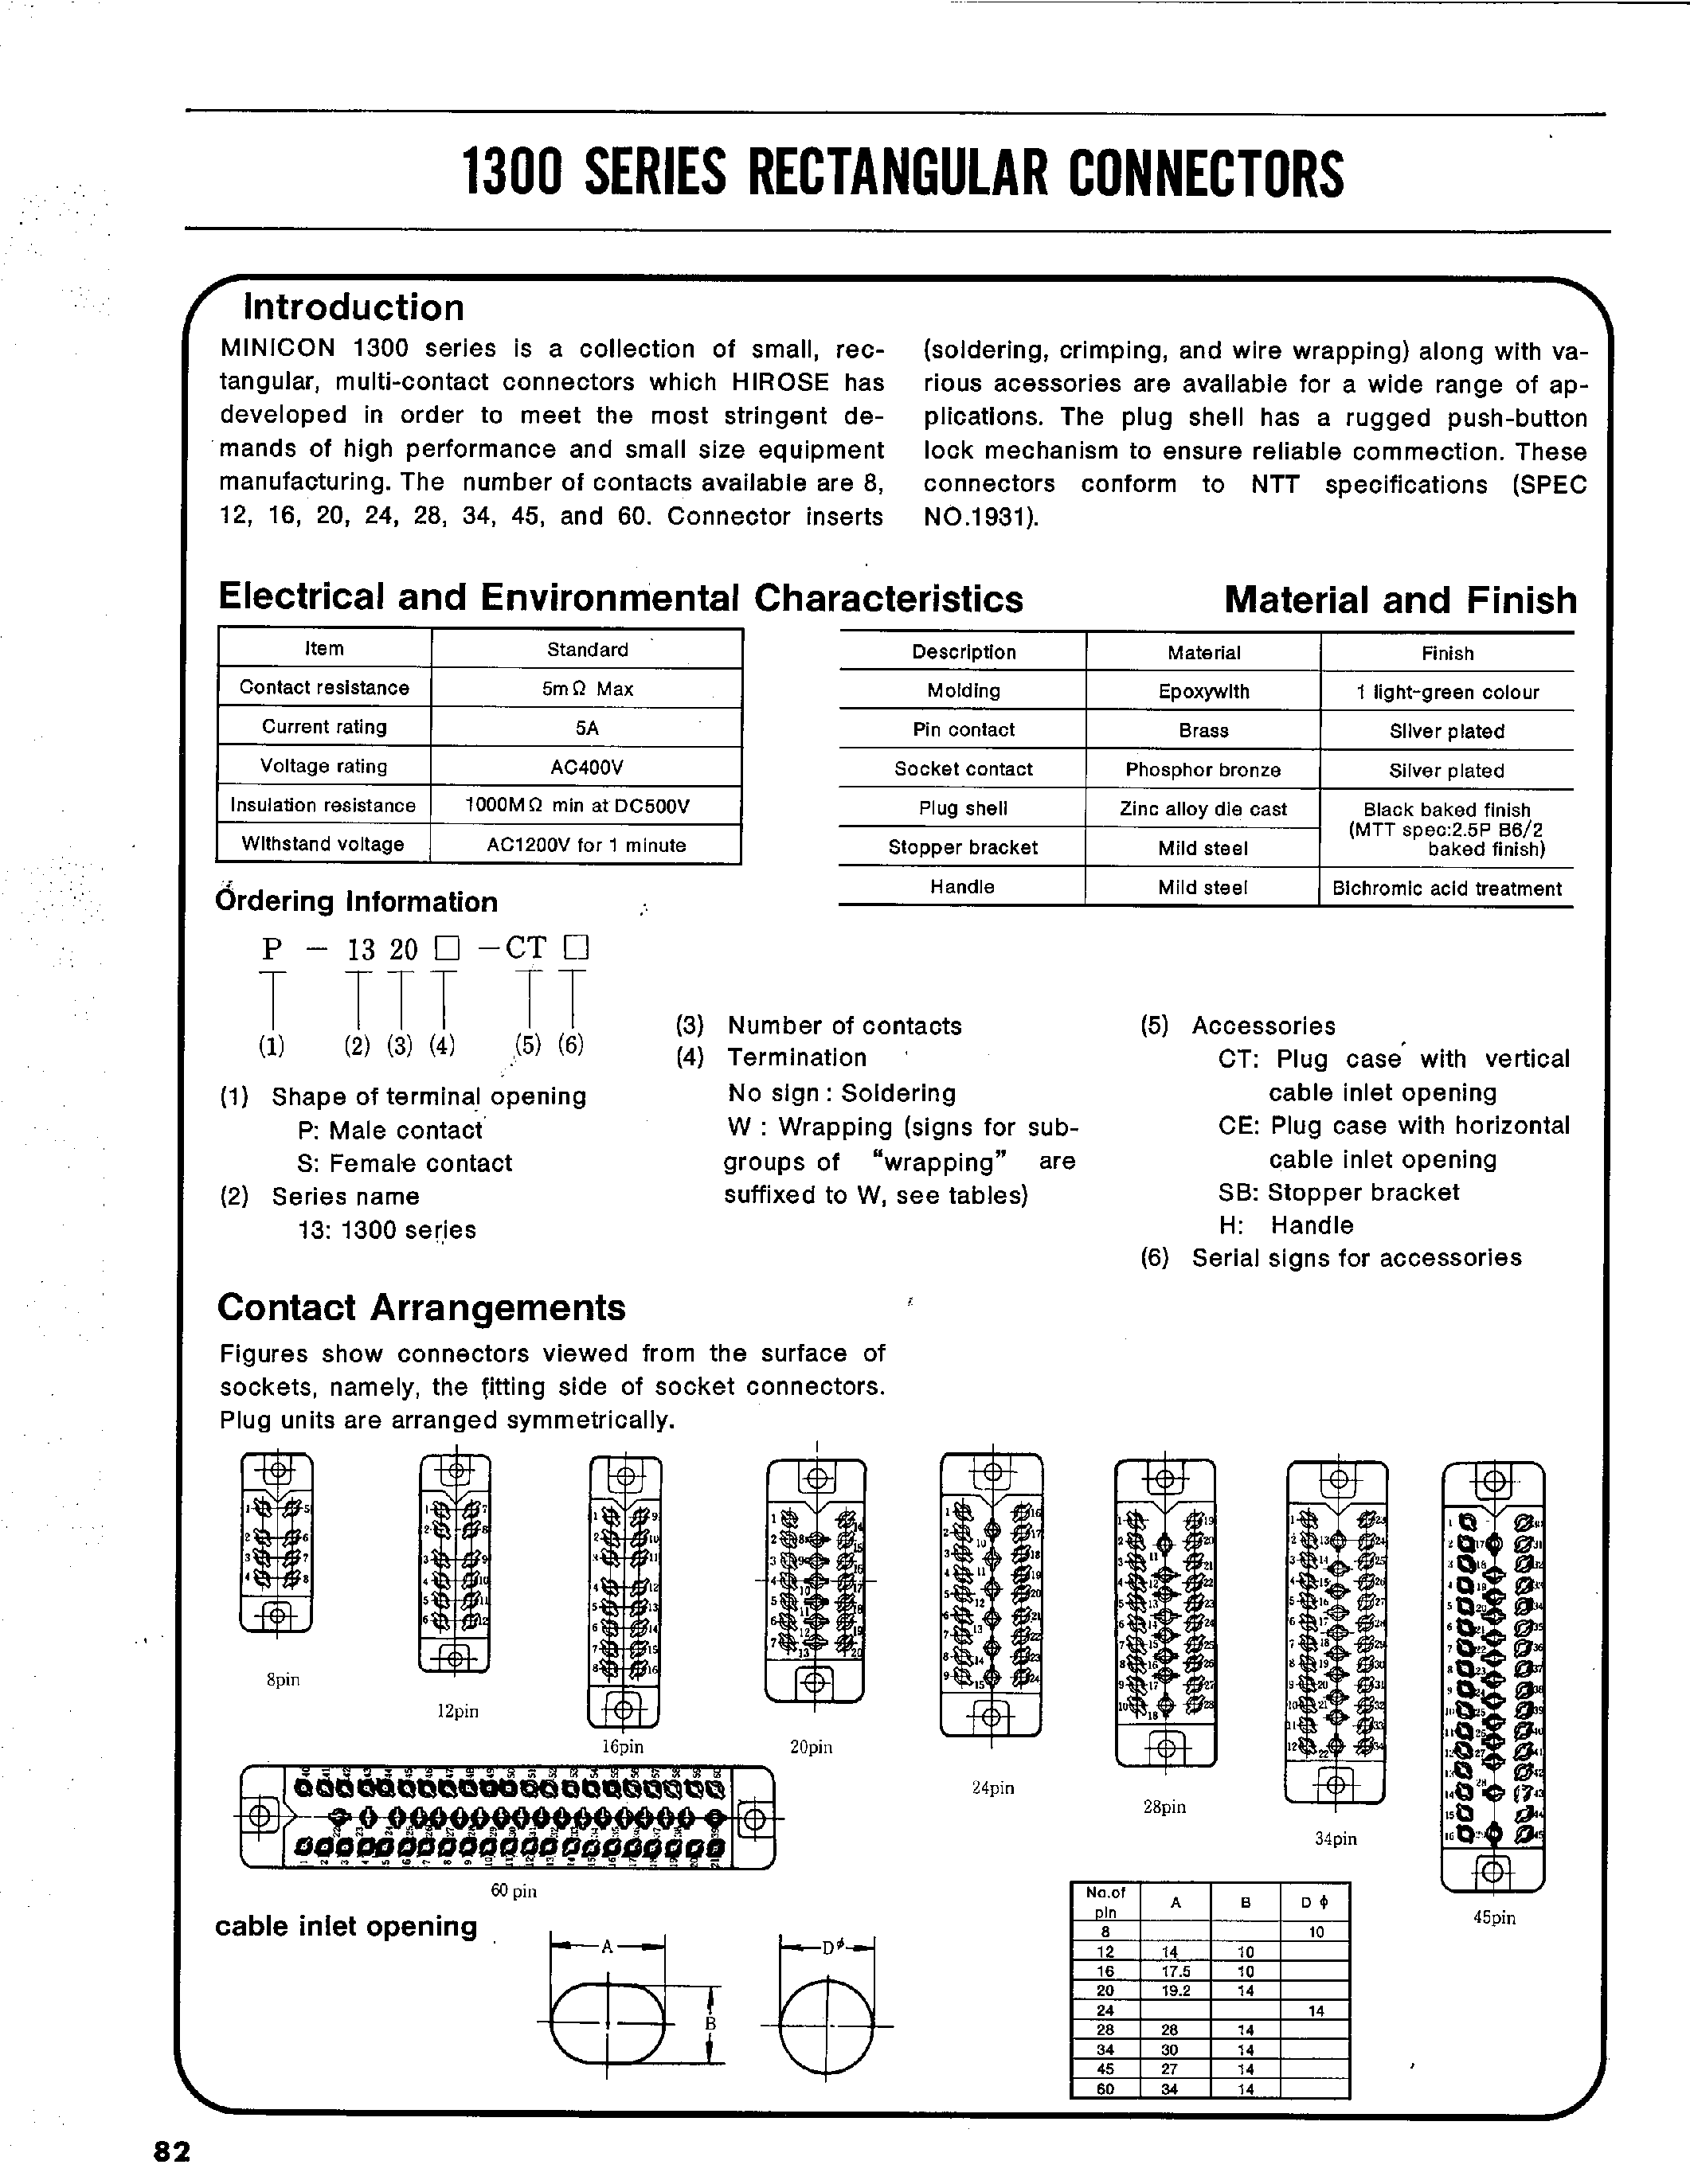 Datasheet P-1320W-CT - 1300 SERIES RECTANGULAR CONNECTORS page 1